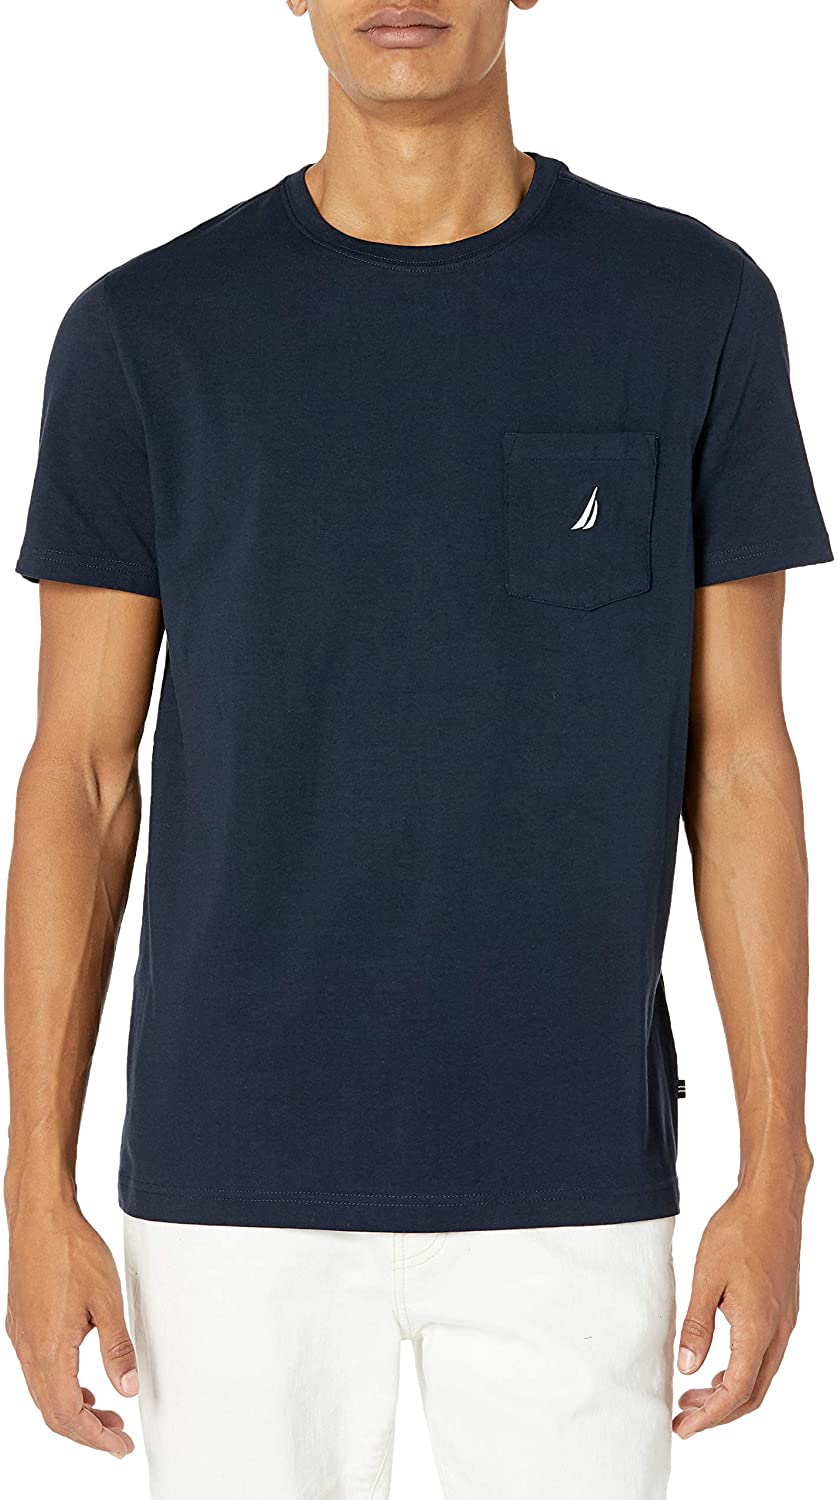 Nautica Men's Solid Crew Neck Short-Sleeve Pocket T-Shirt